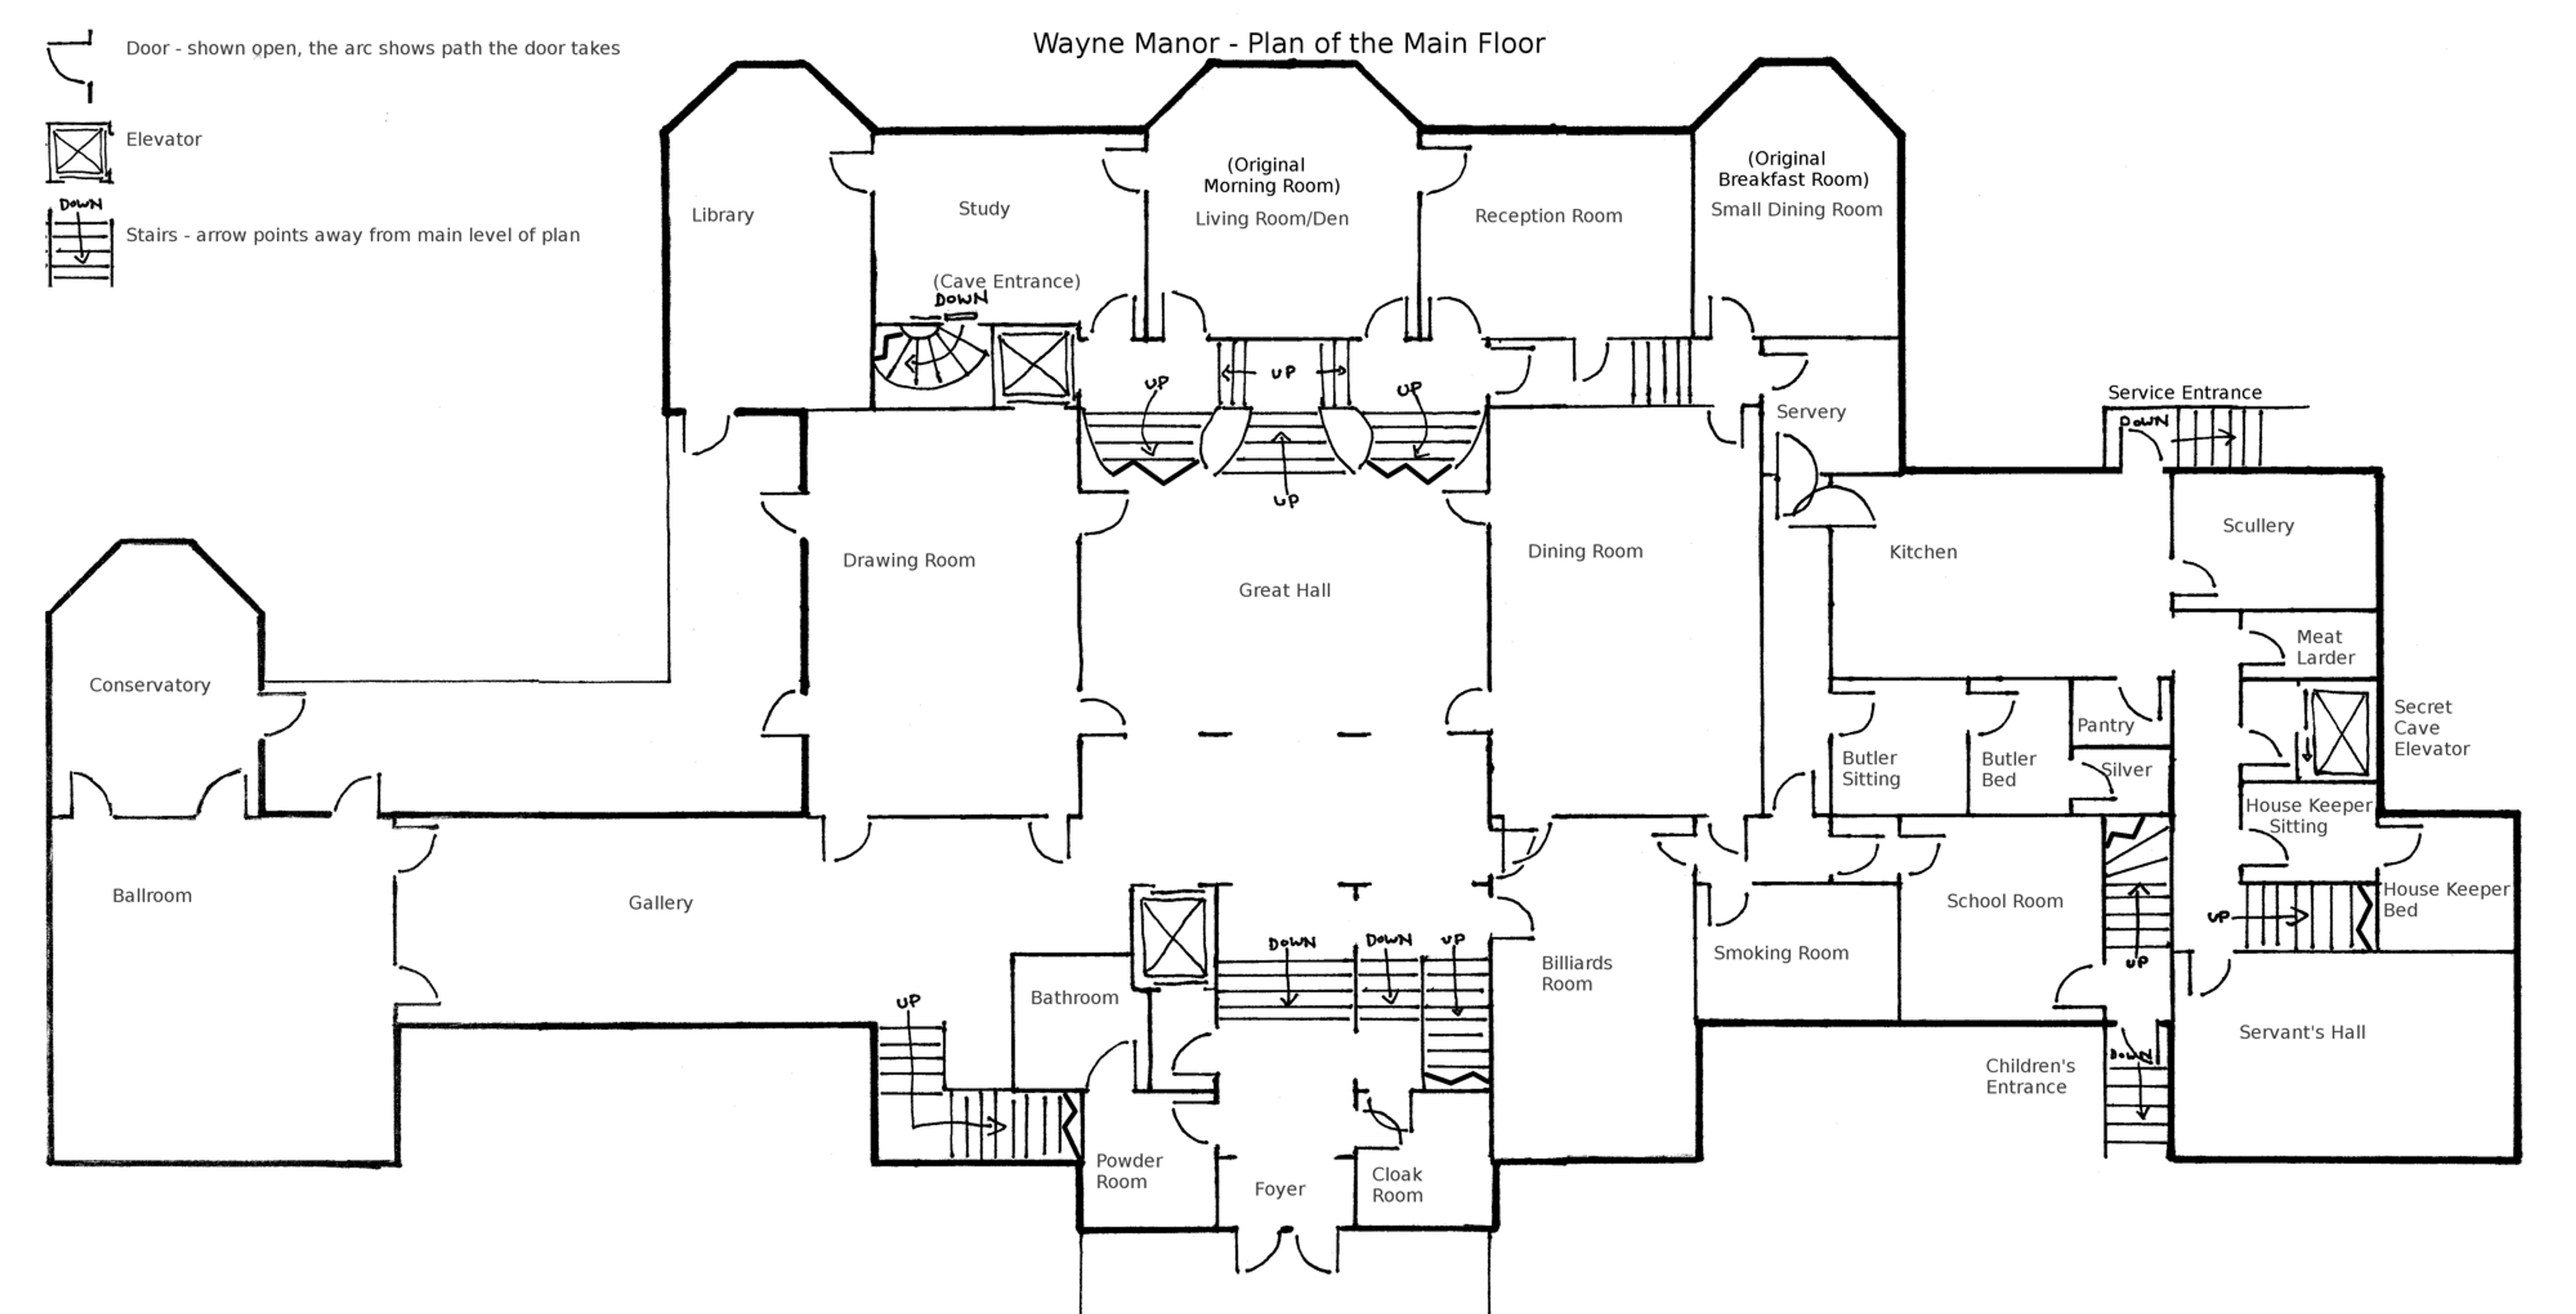 Wayne Manor Main Floor Plan by geckobot on DeviantArt